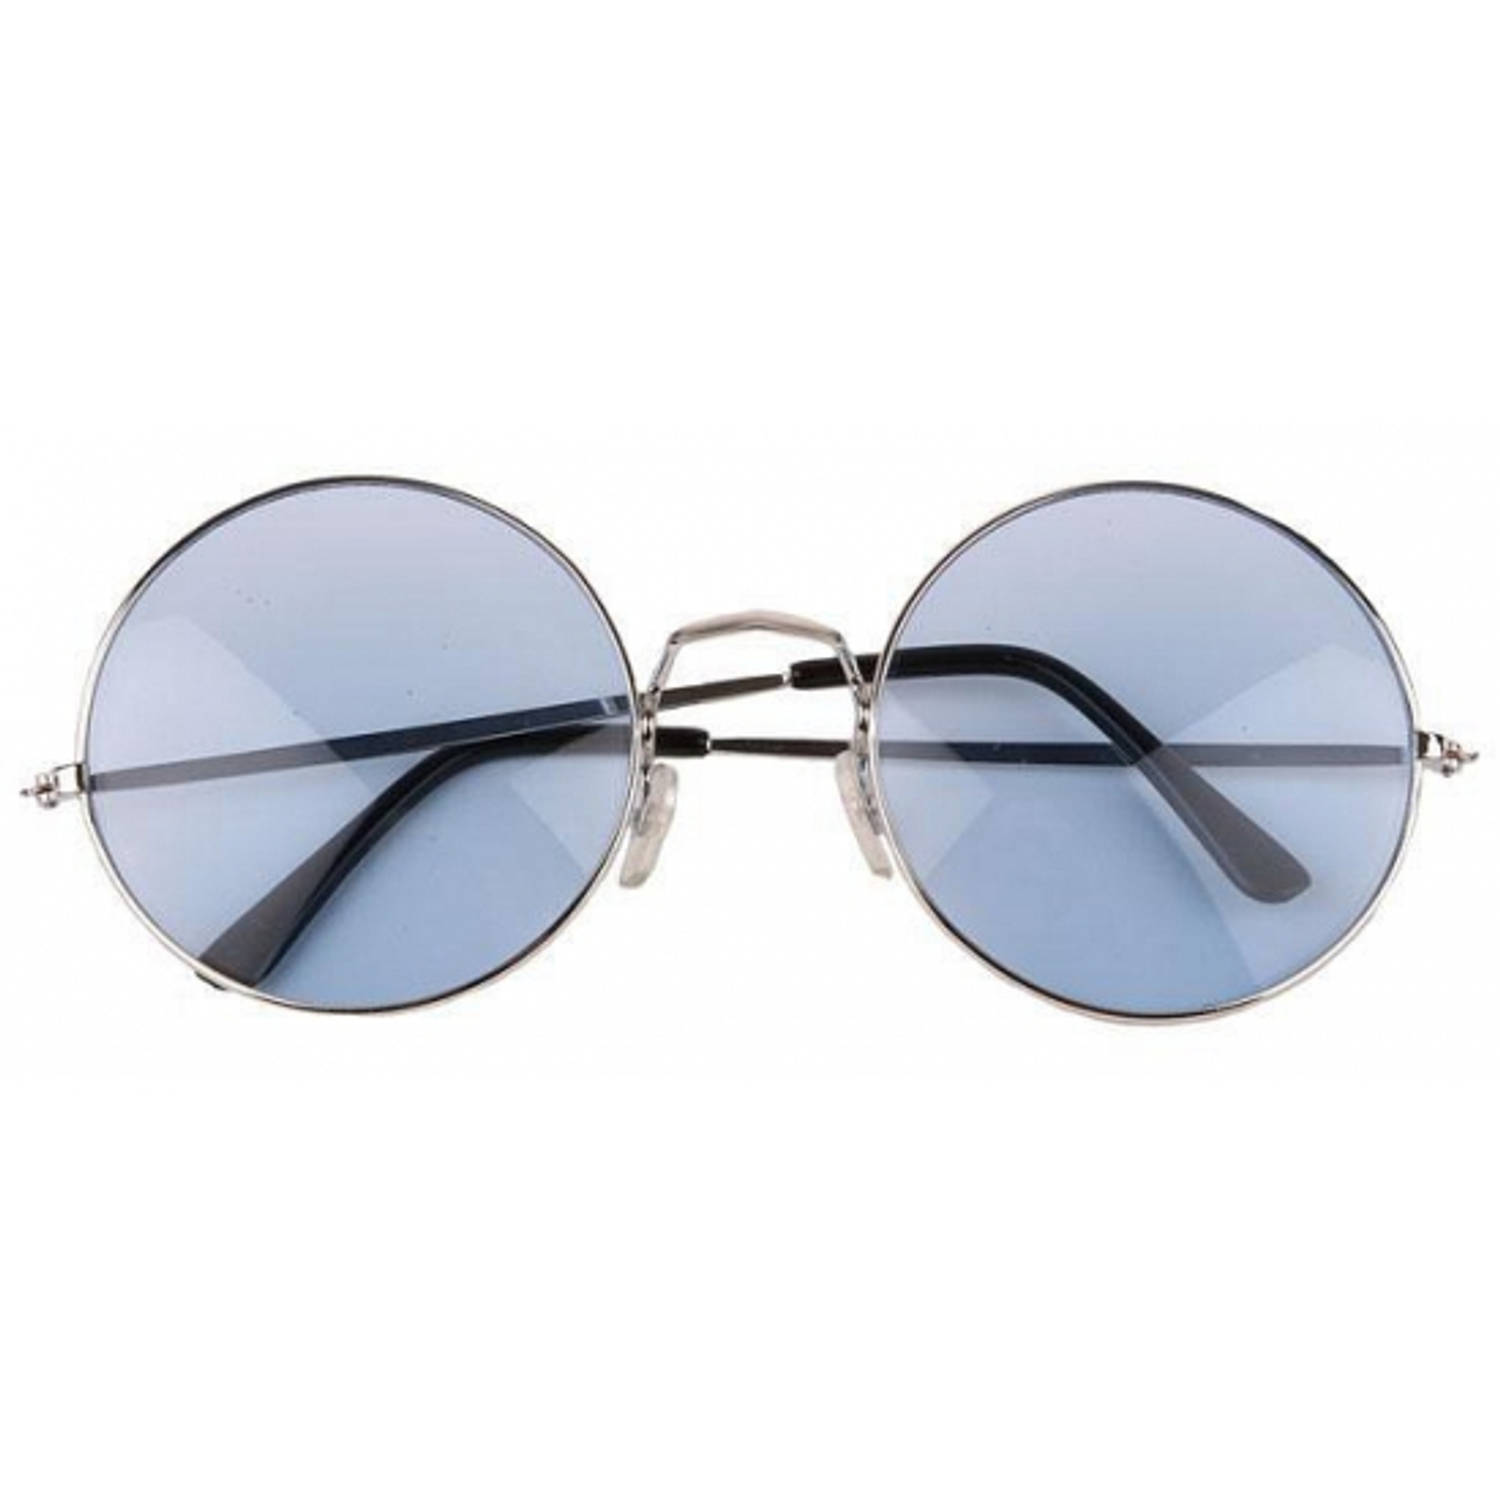 Blauwe XL hippie bril grote glazen - Verkleedbrillen | Blokker